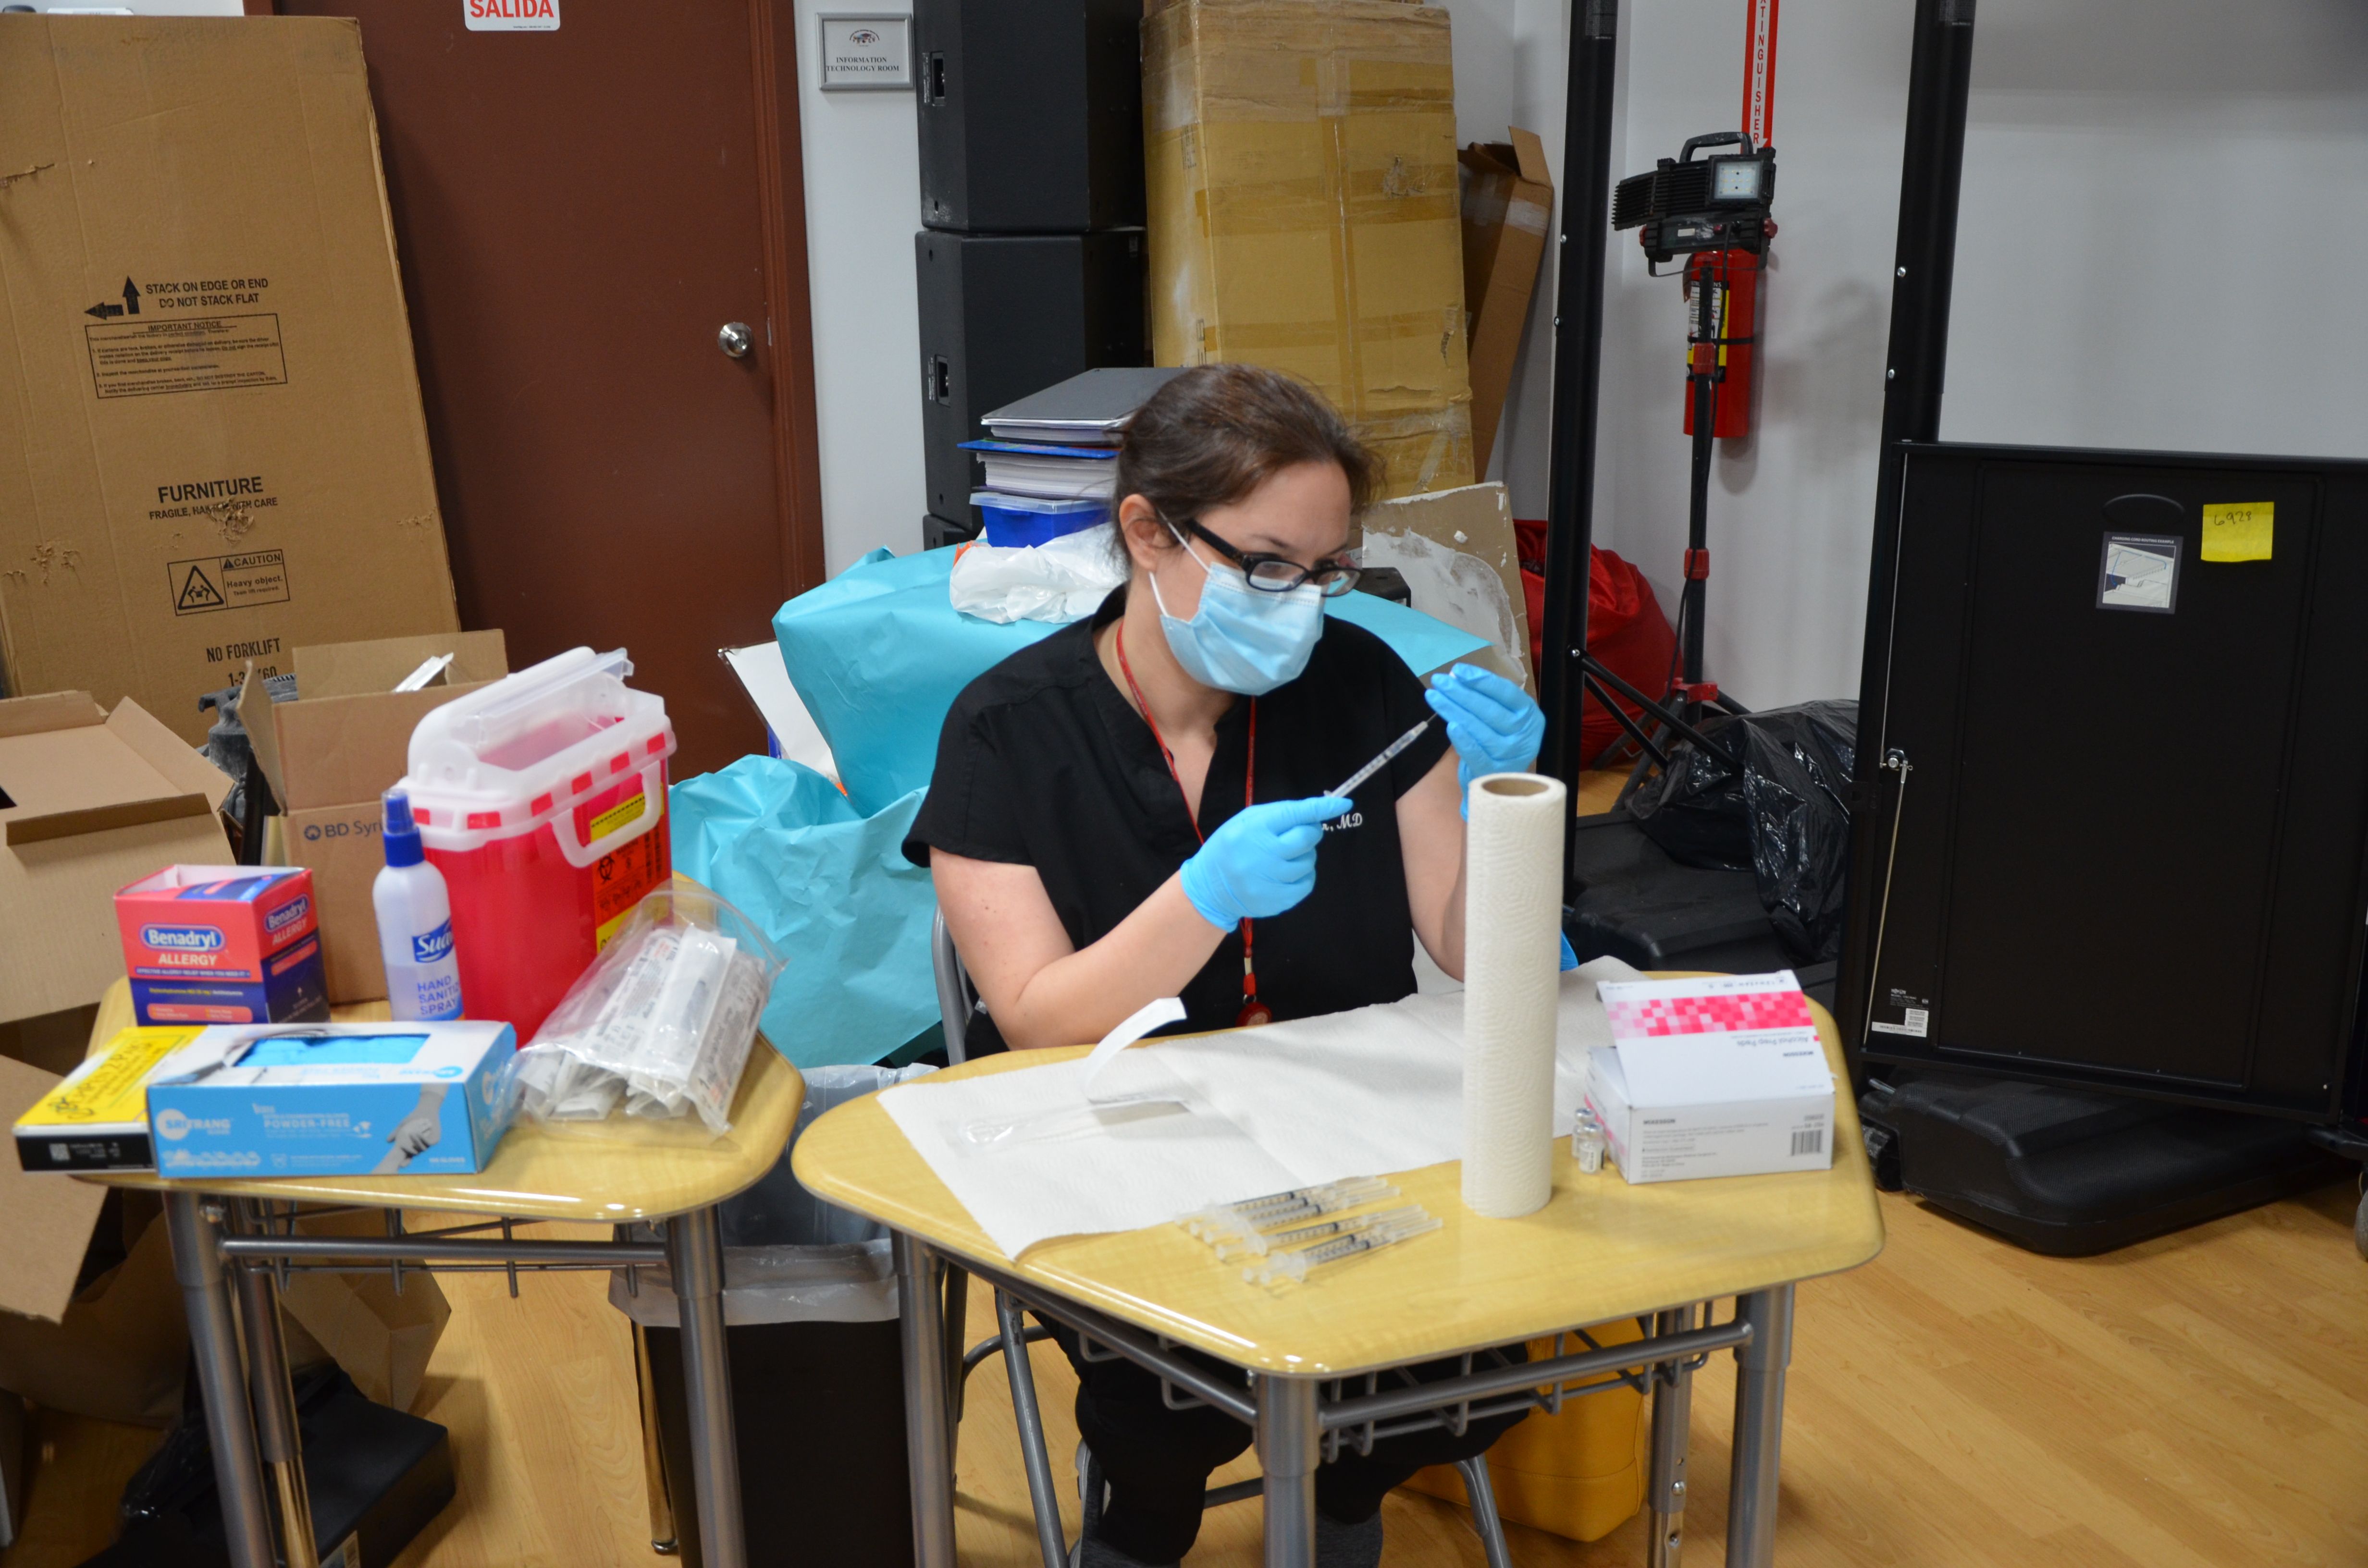 Dr. Brooke Spector prepares vaccine